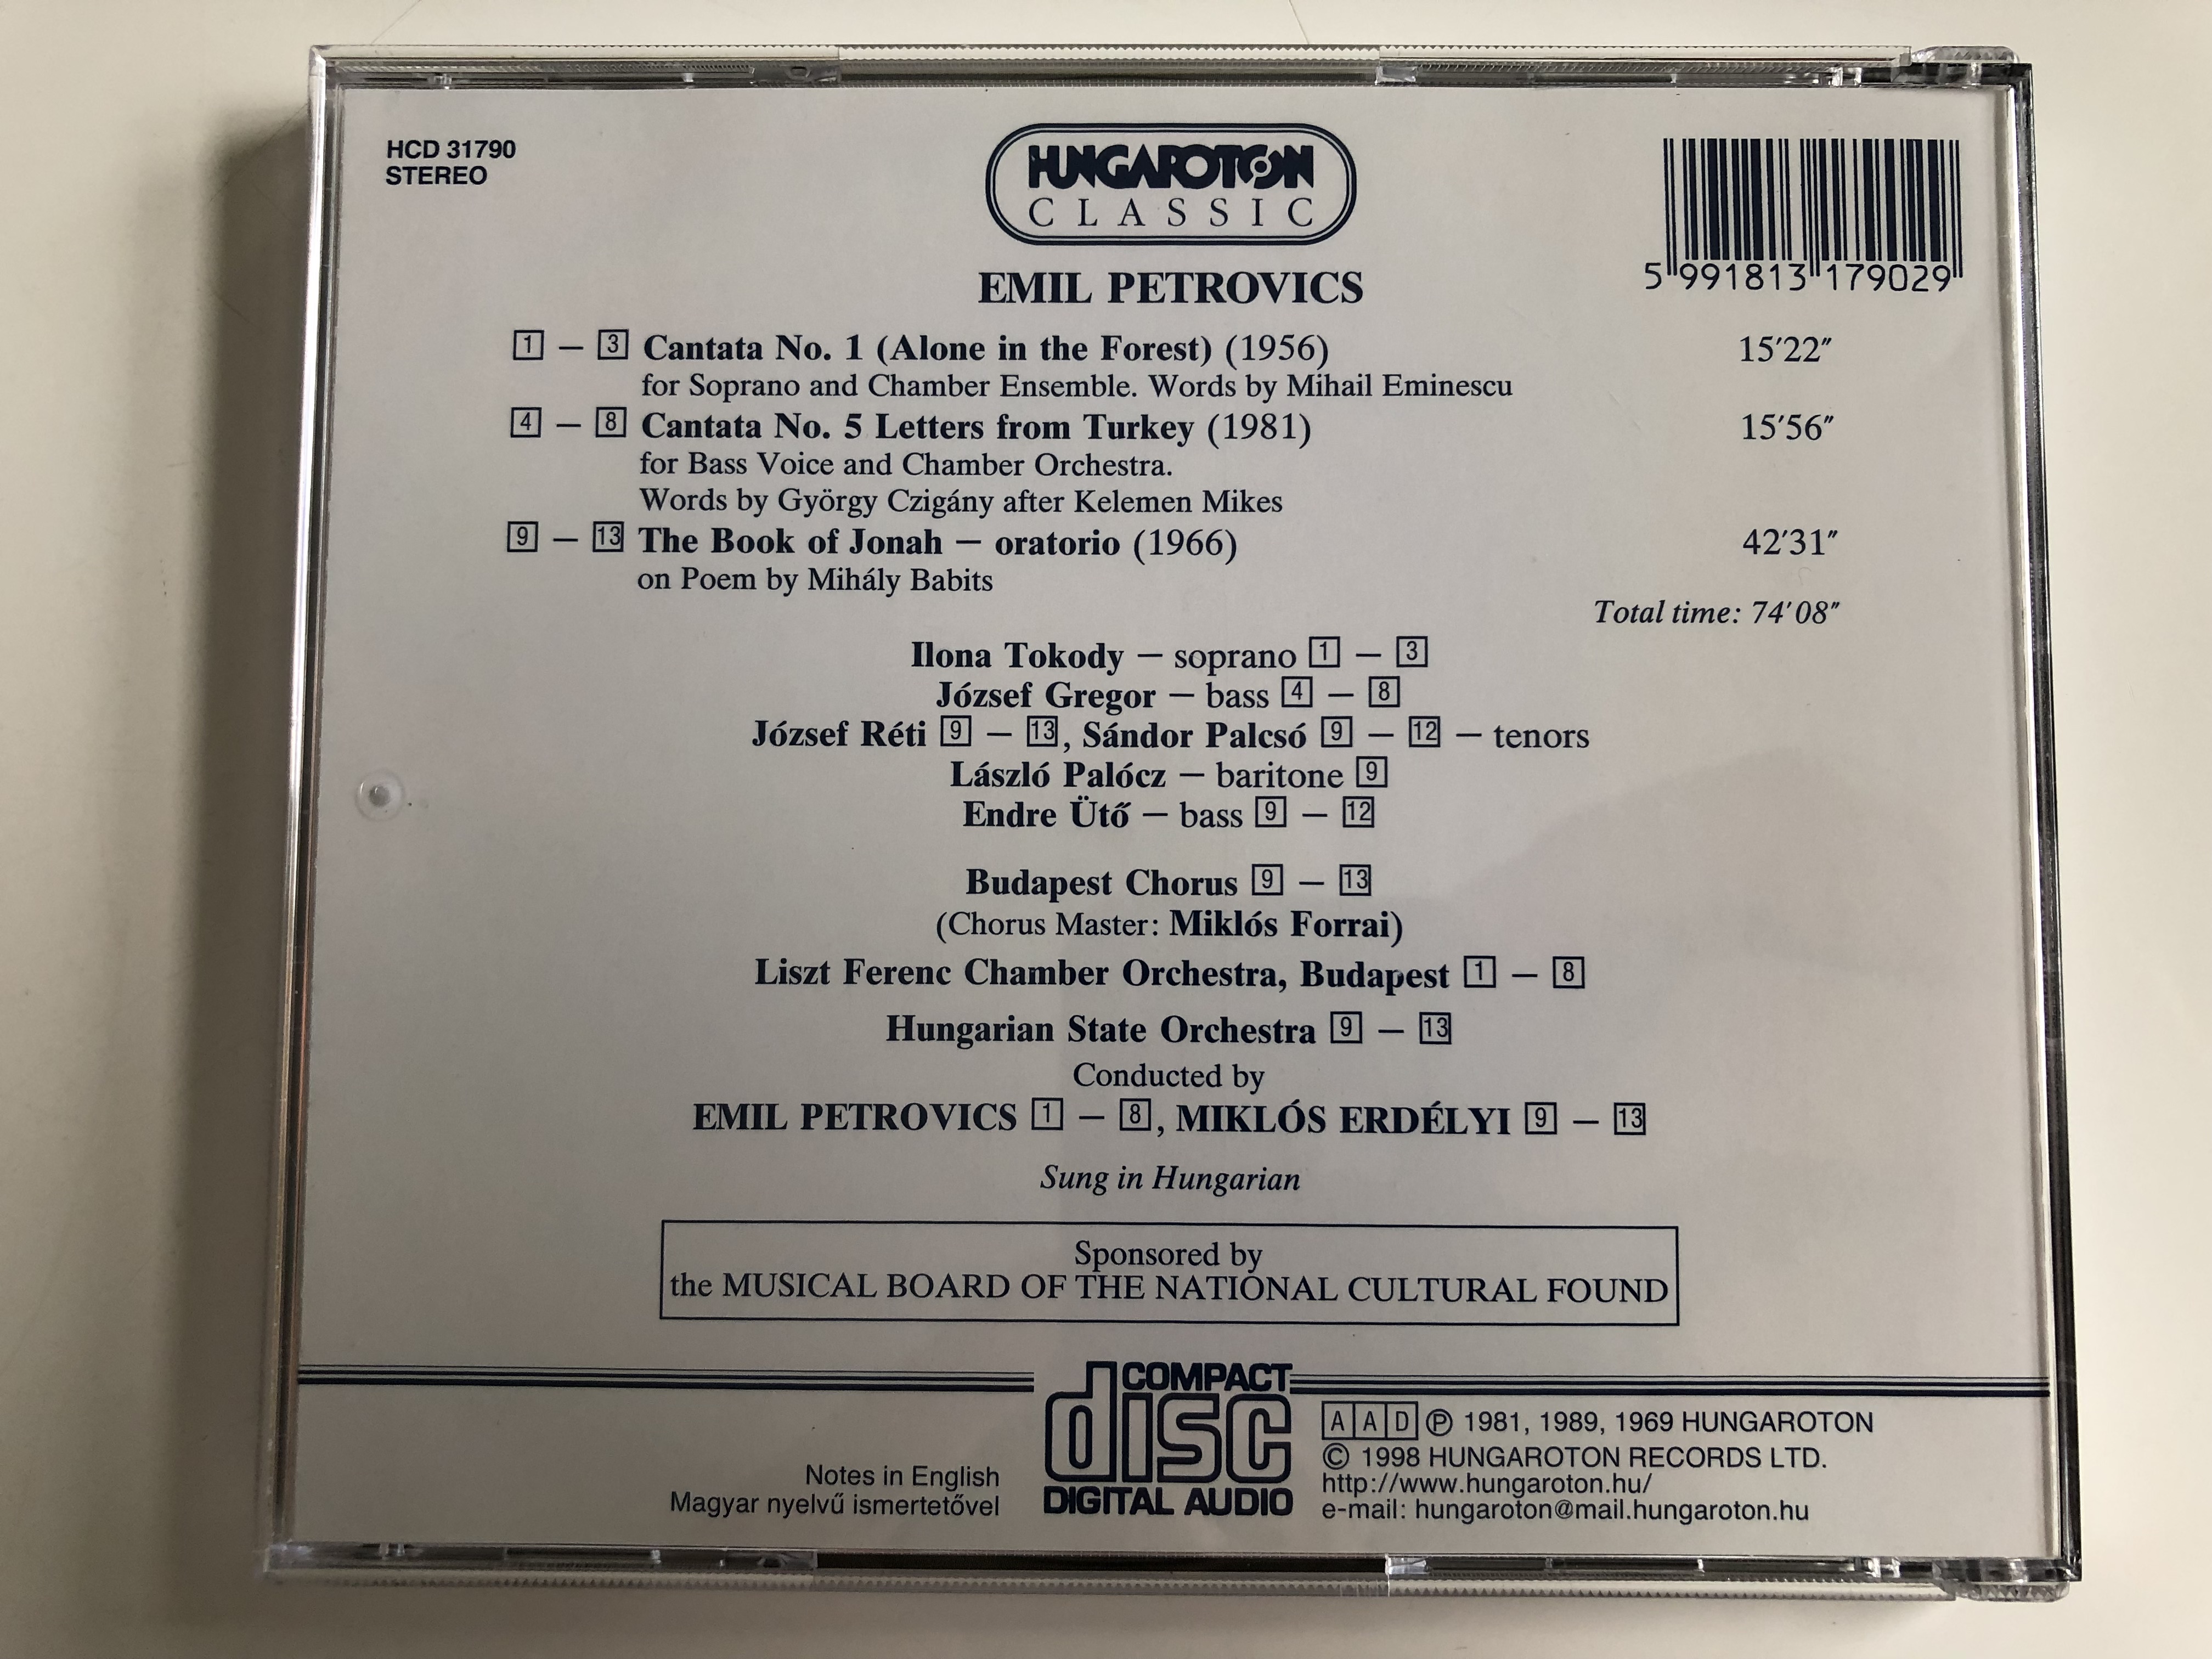 petrovics-cantata-no-1-alone-in-the-forest-cantata-no-5-letters-from-turkey-the-book-of-jonah-oratorio-hungaroton-audio-cd-1981-stereo-hcd-31790-14-.jpg